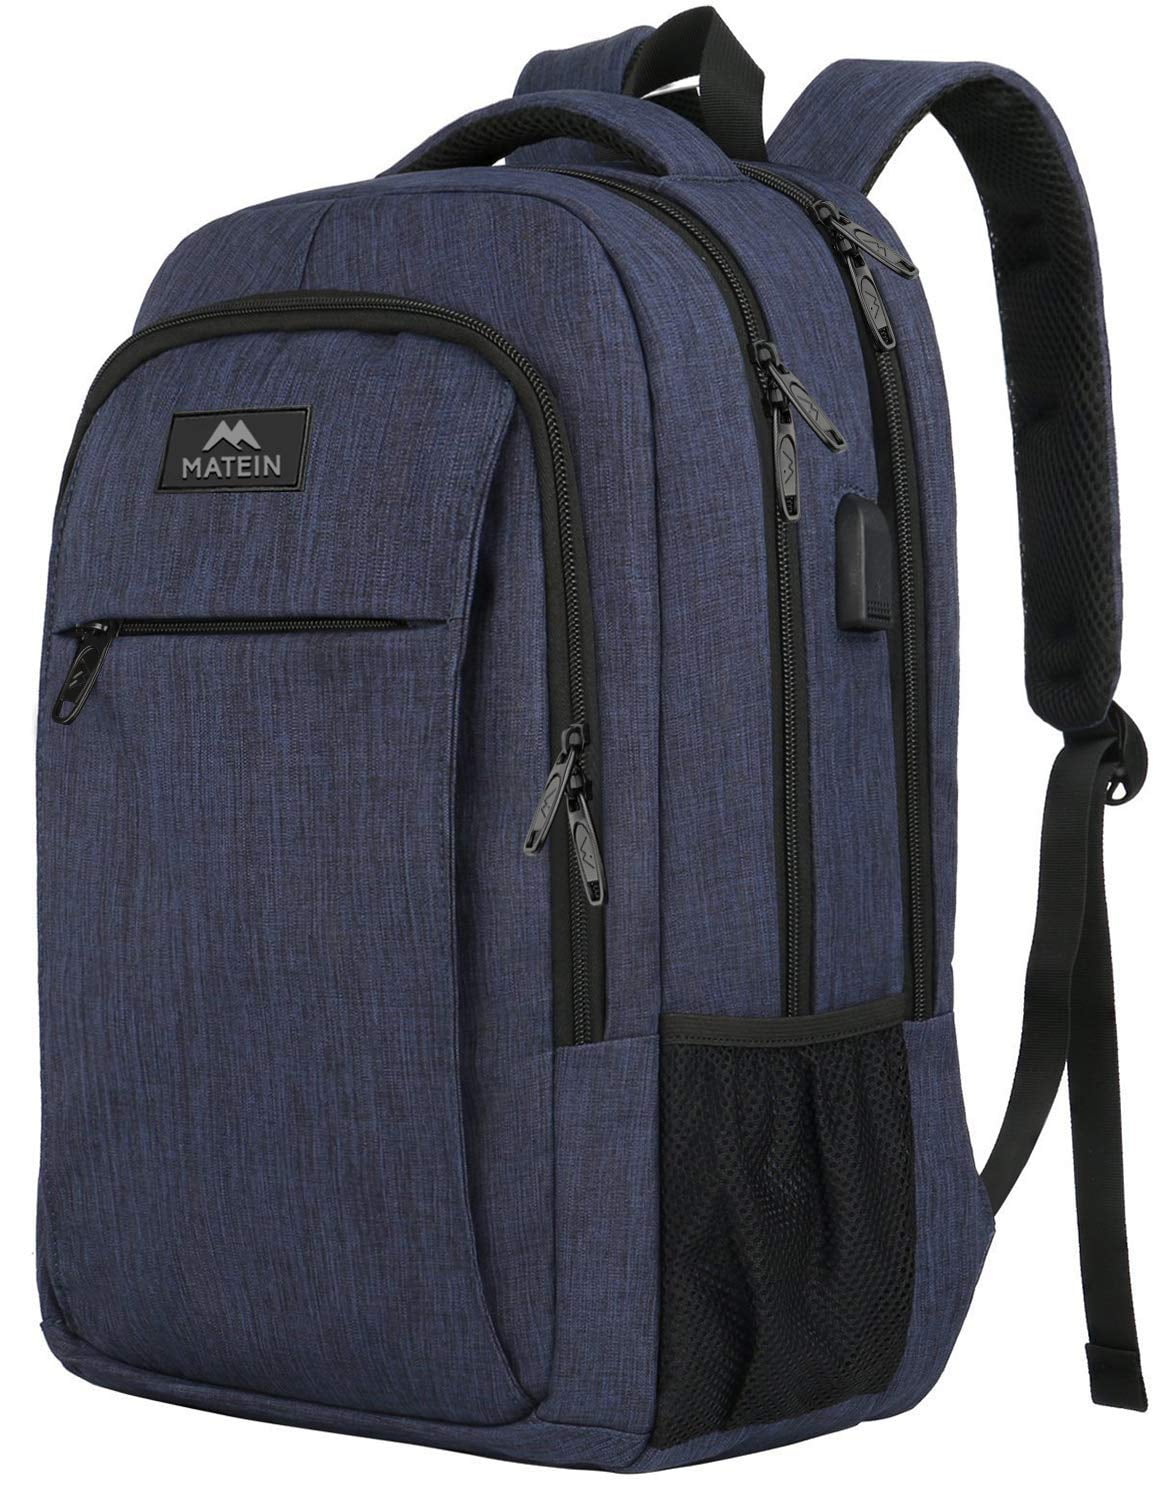 Laptop Backpack Boys Grils Skate Dinosaur School Bookbags Computer Daypack for Travel Hiking Camping